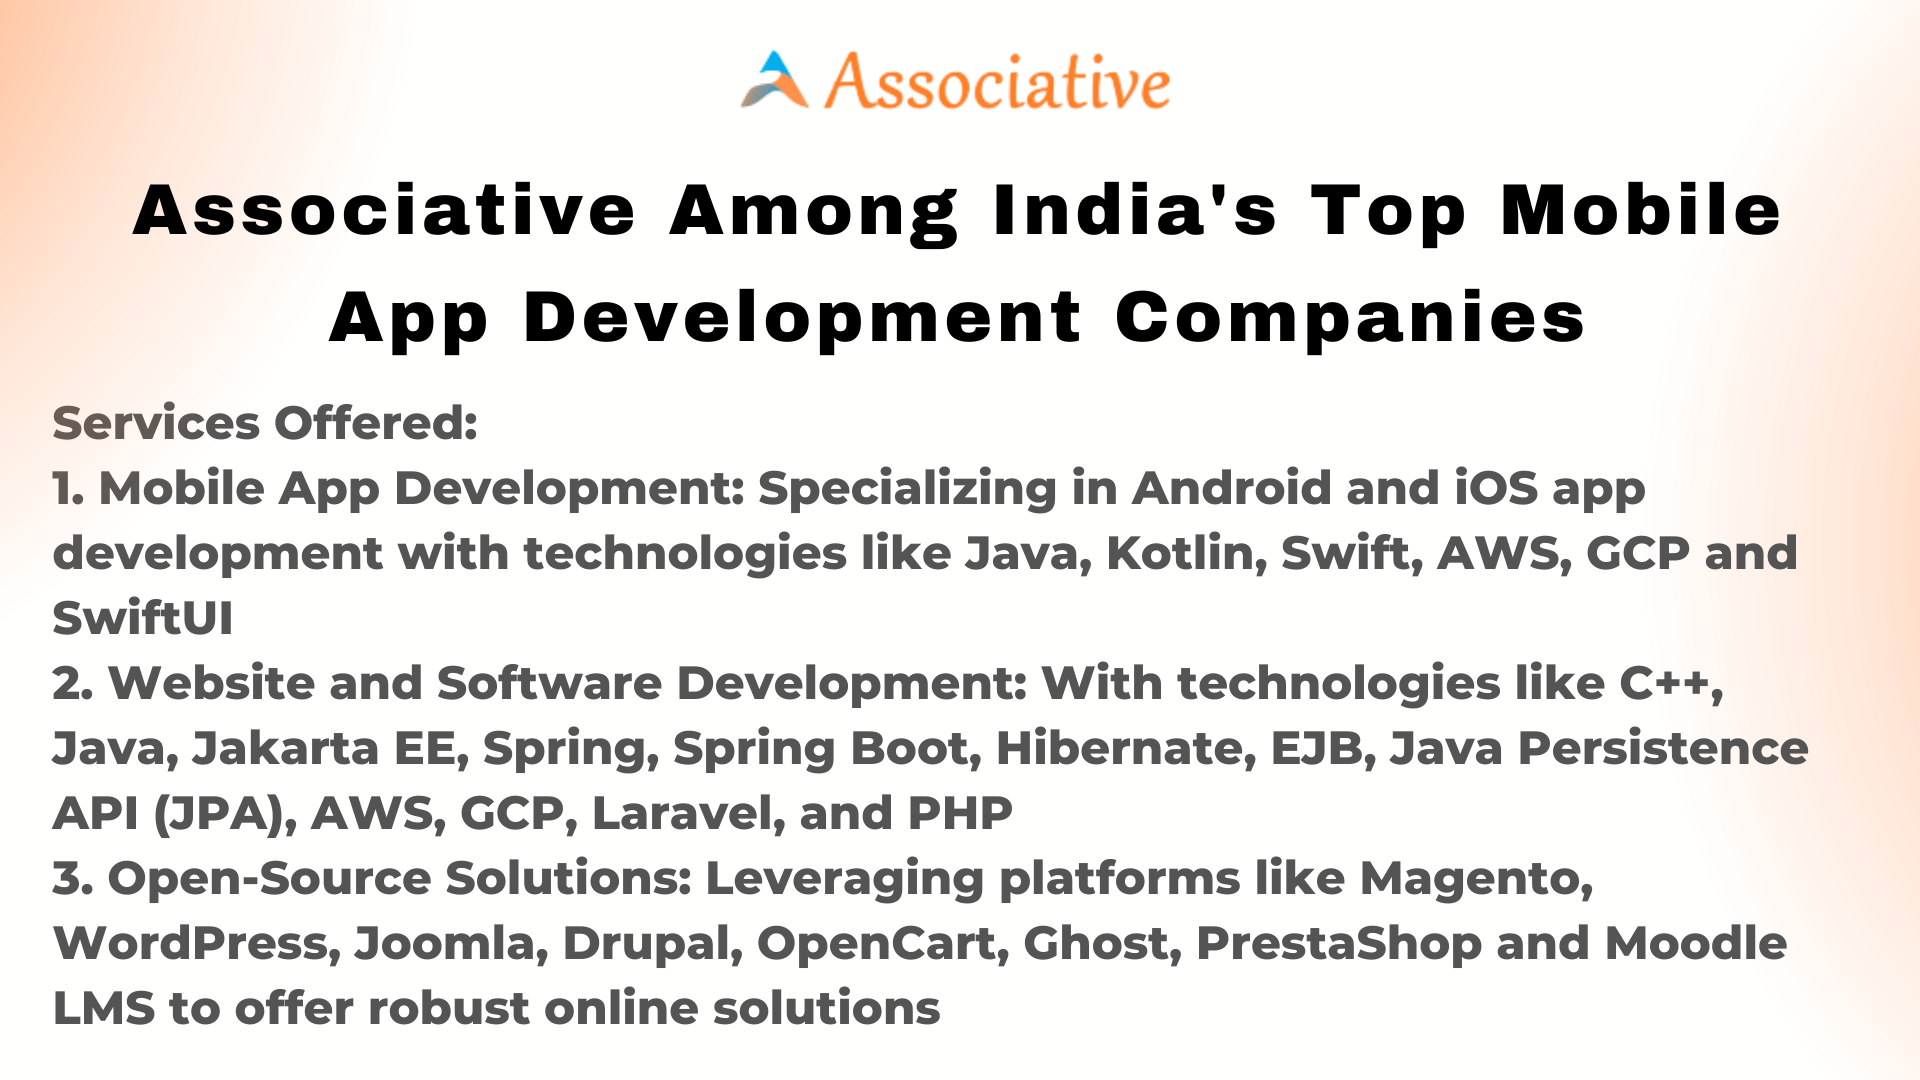 Associative Among India's Top Mobile App Development Companies